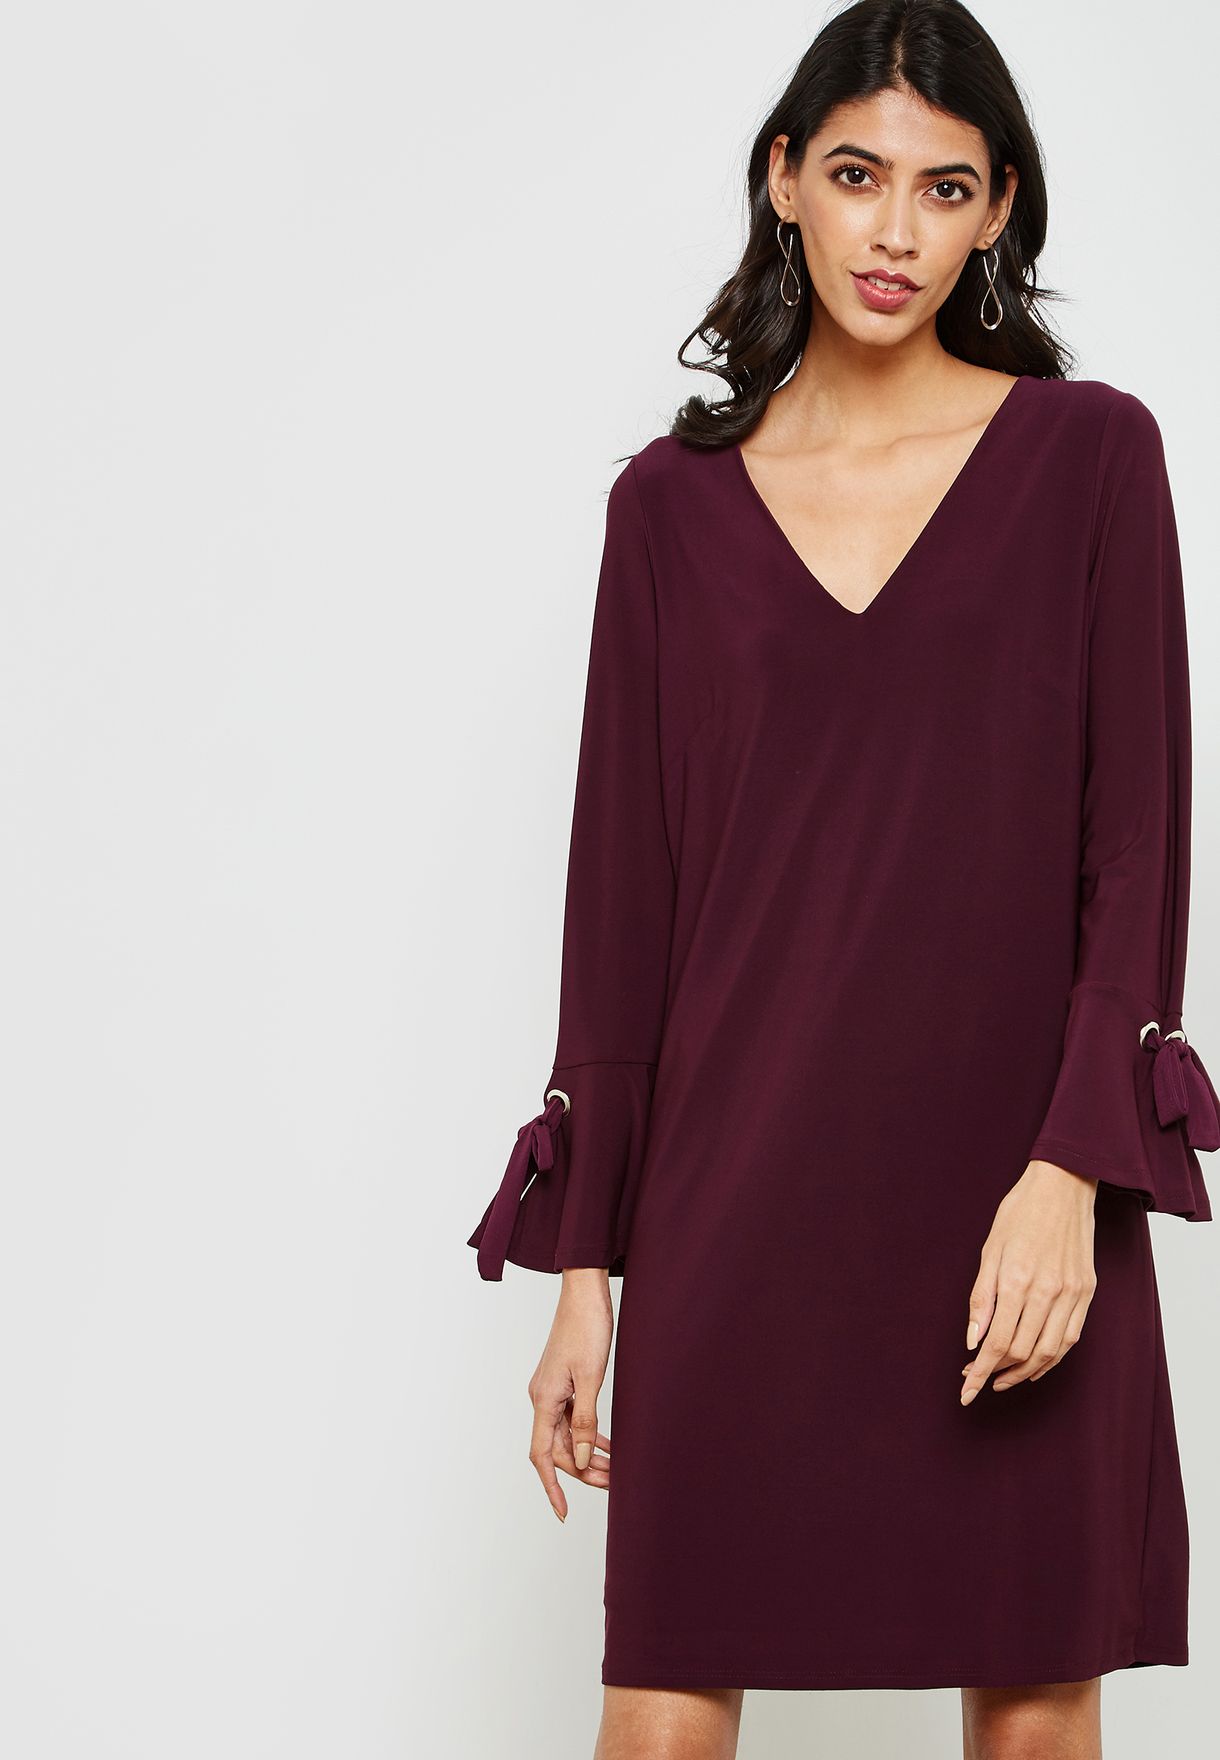 wallis burgundy dress